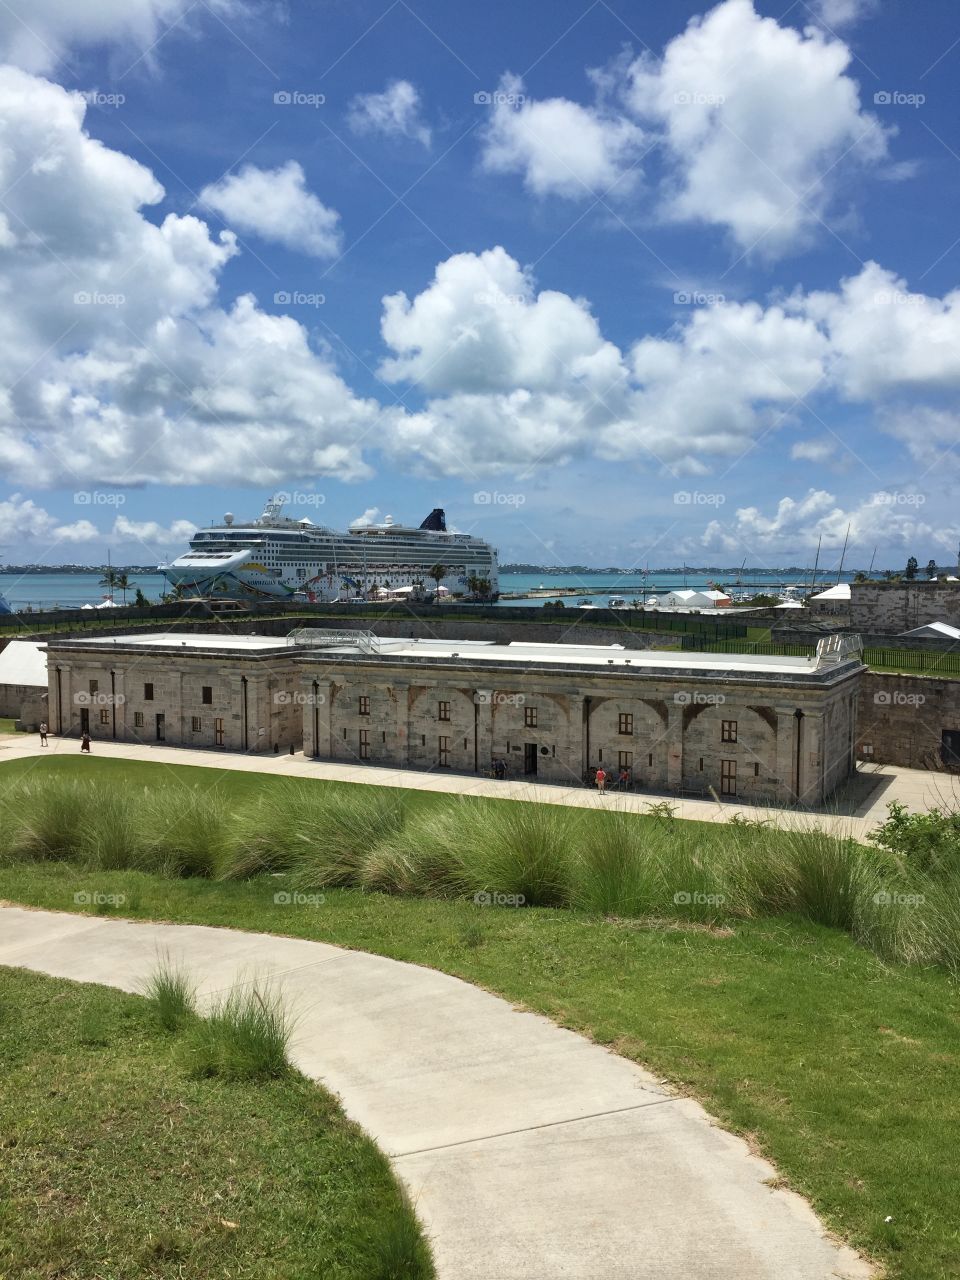 Cruise ship at port in Bermuda.